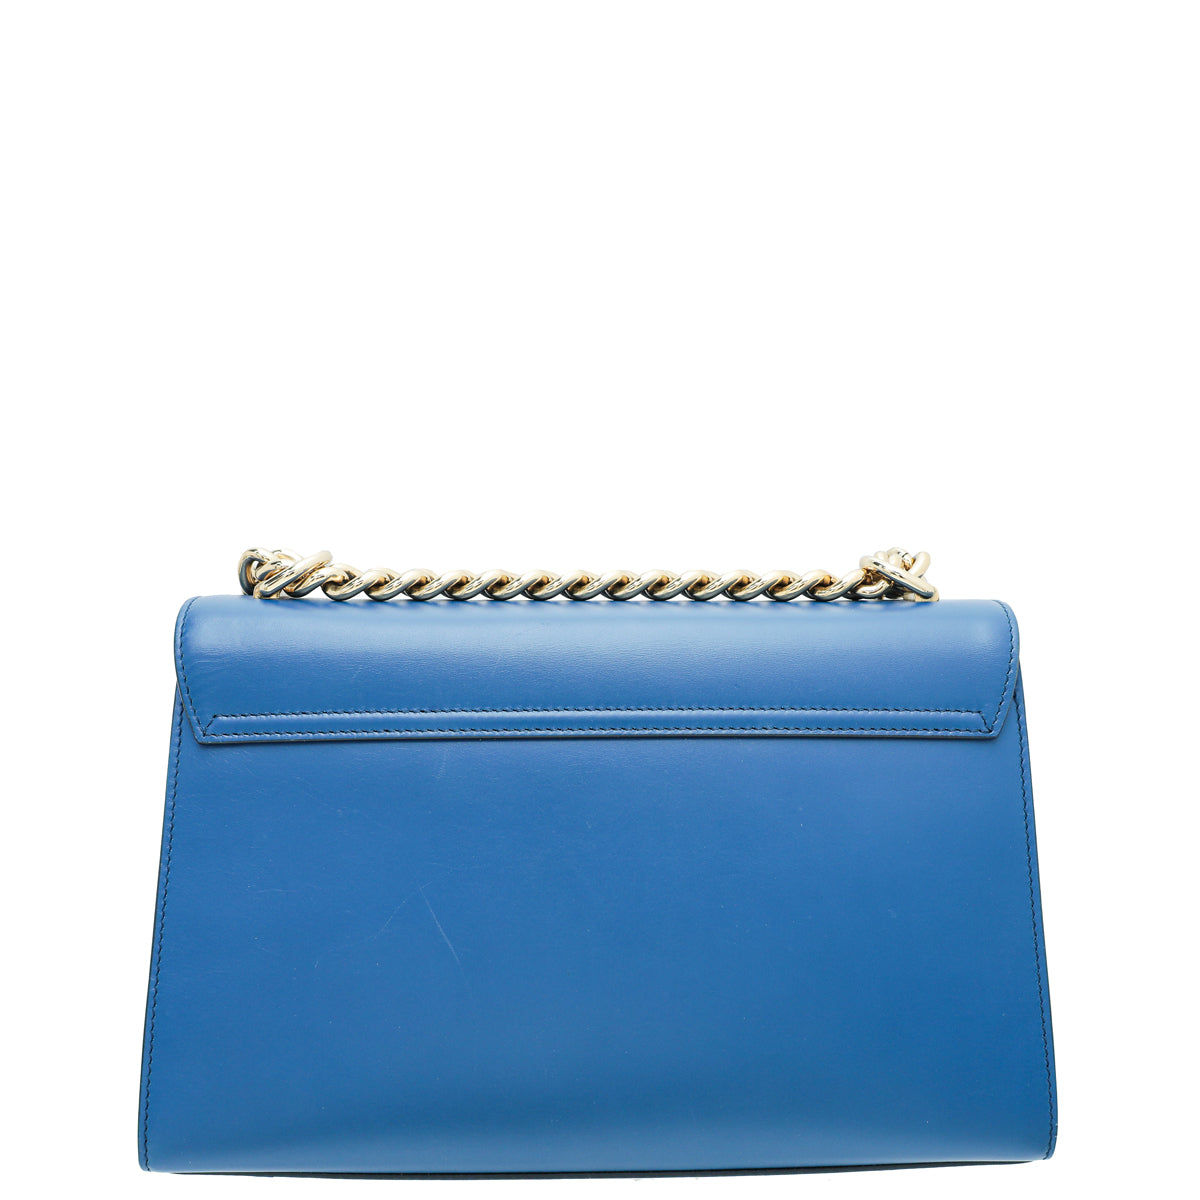 Dolce & Gabbana Blue Lucia Bee Large Bag